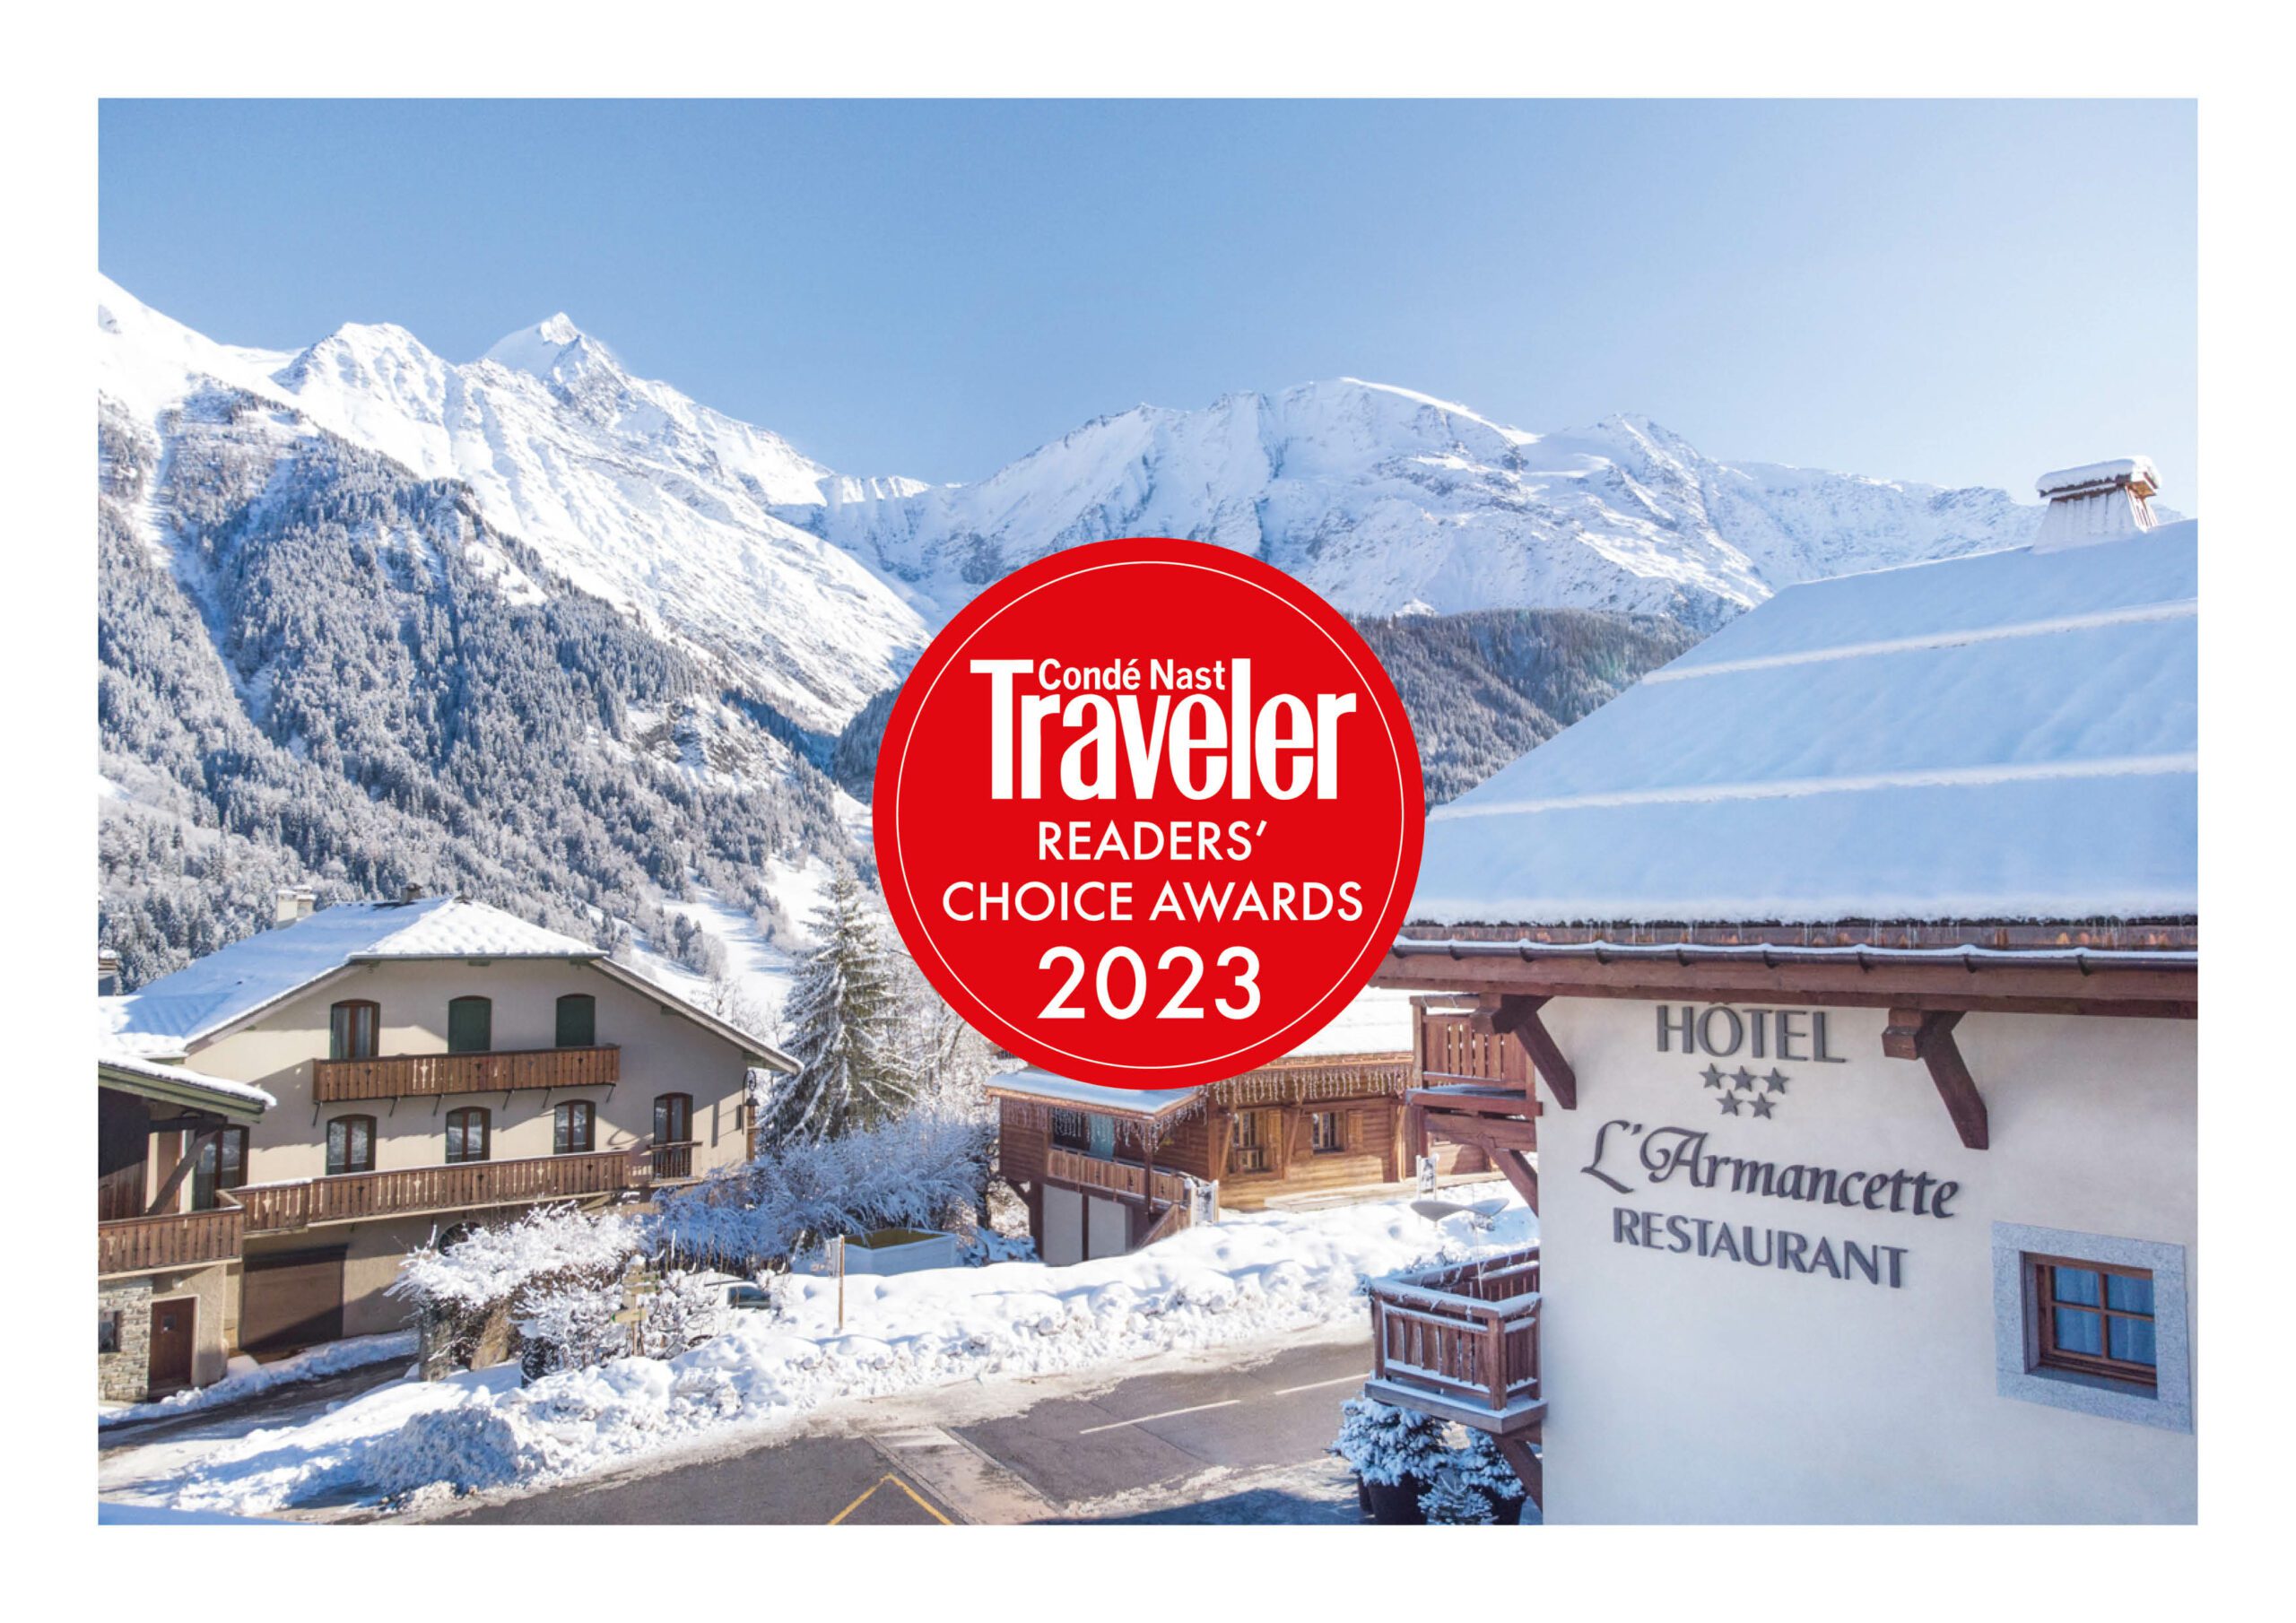  Armancette – 3rd place Condé Nast Traveler Readers’ Choice Award 2023